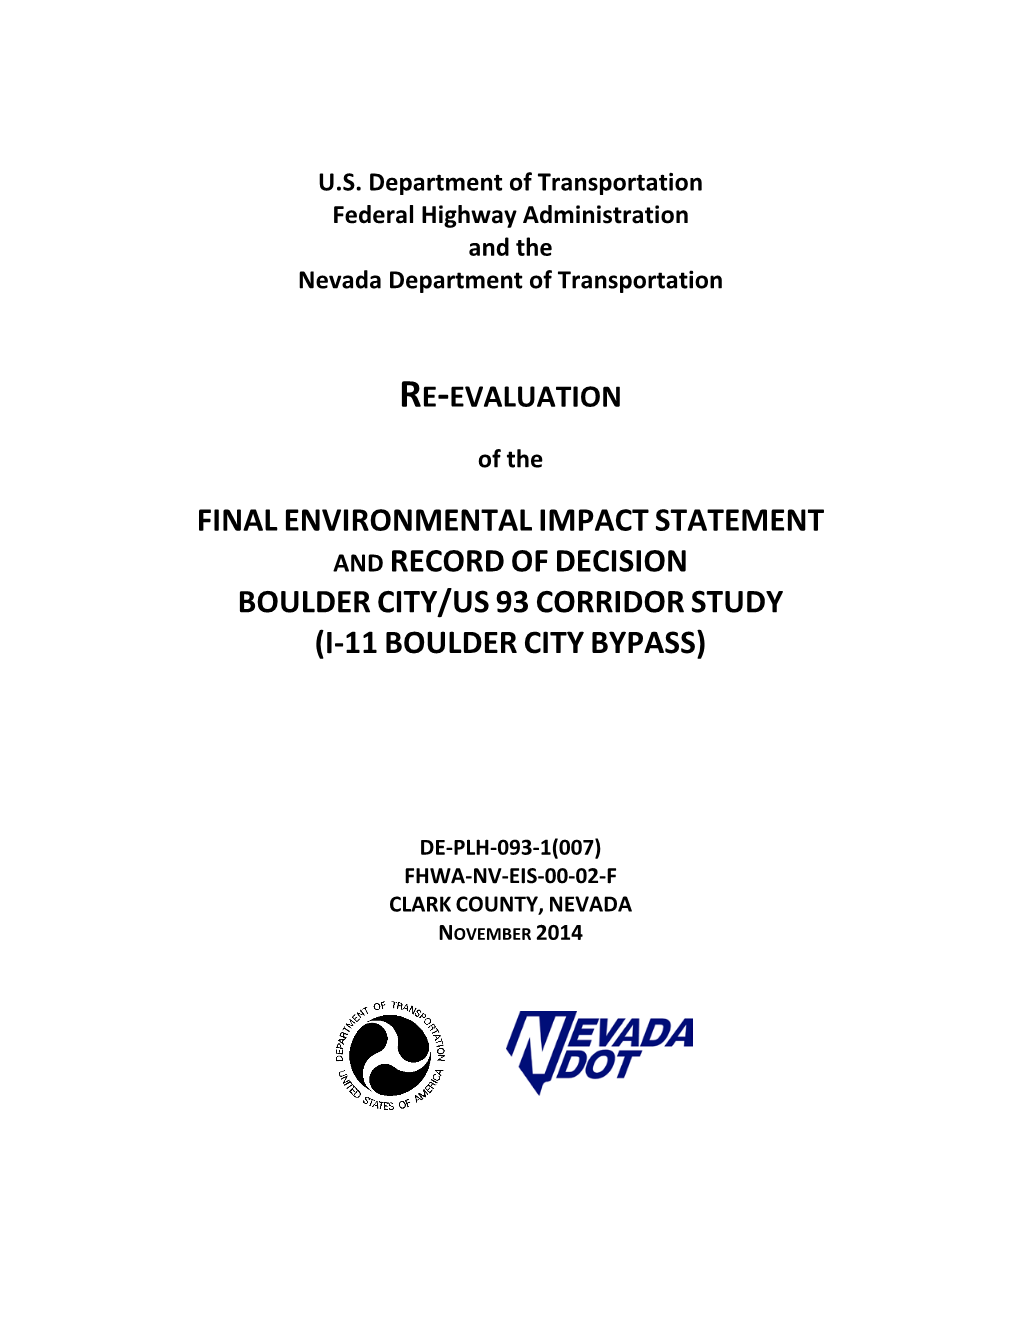 I-11 Boulder City Bypass Final Environmental Impact Statement Re